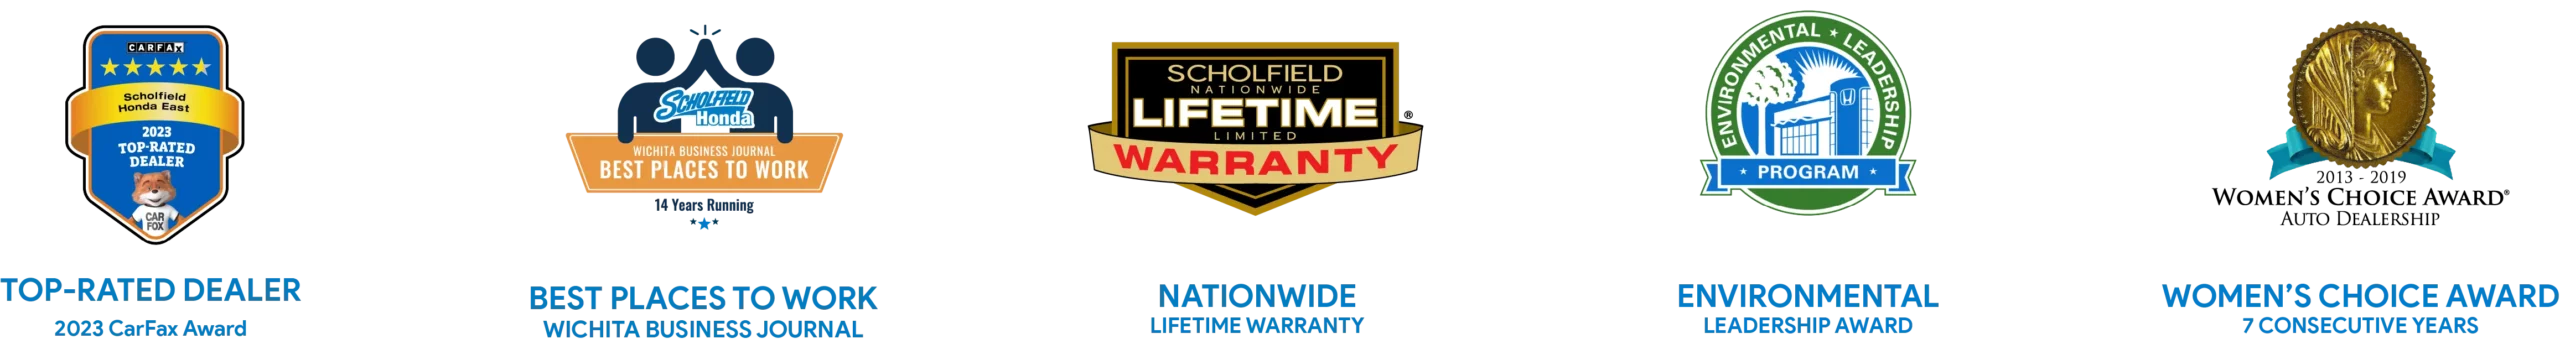 Scholfield Honda Accolades and Awards Logos